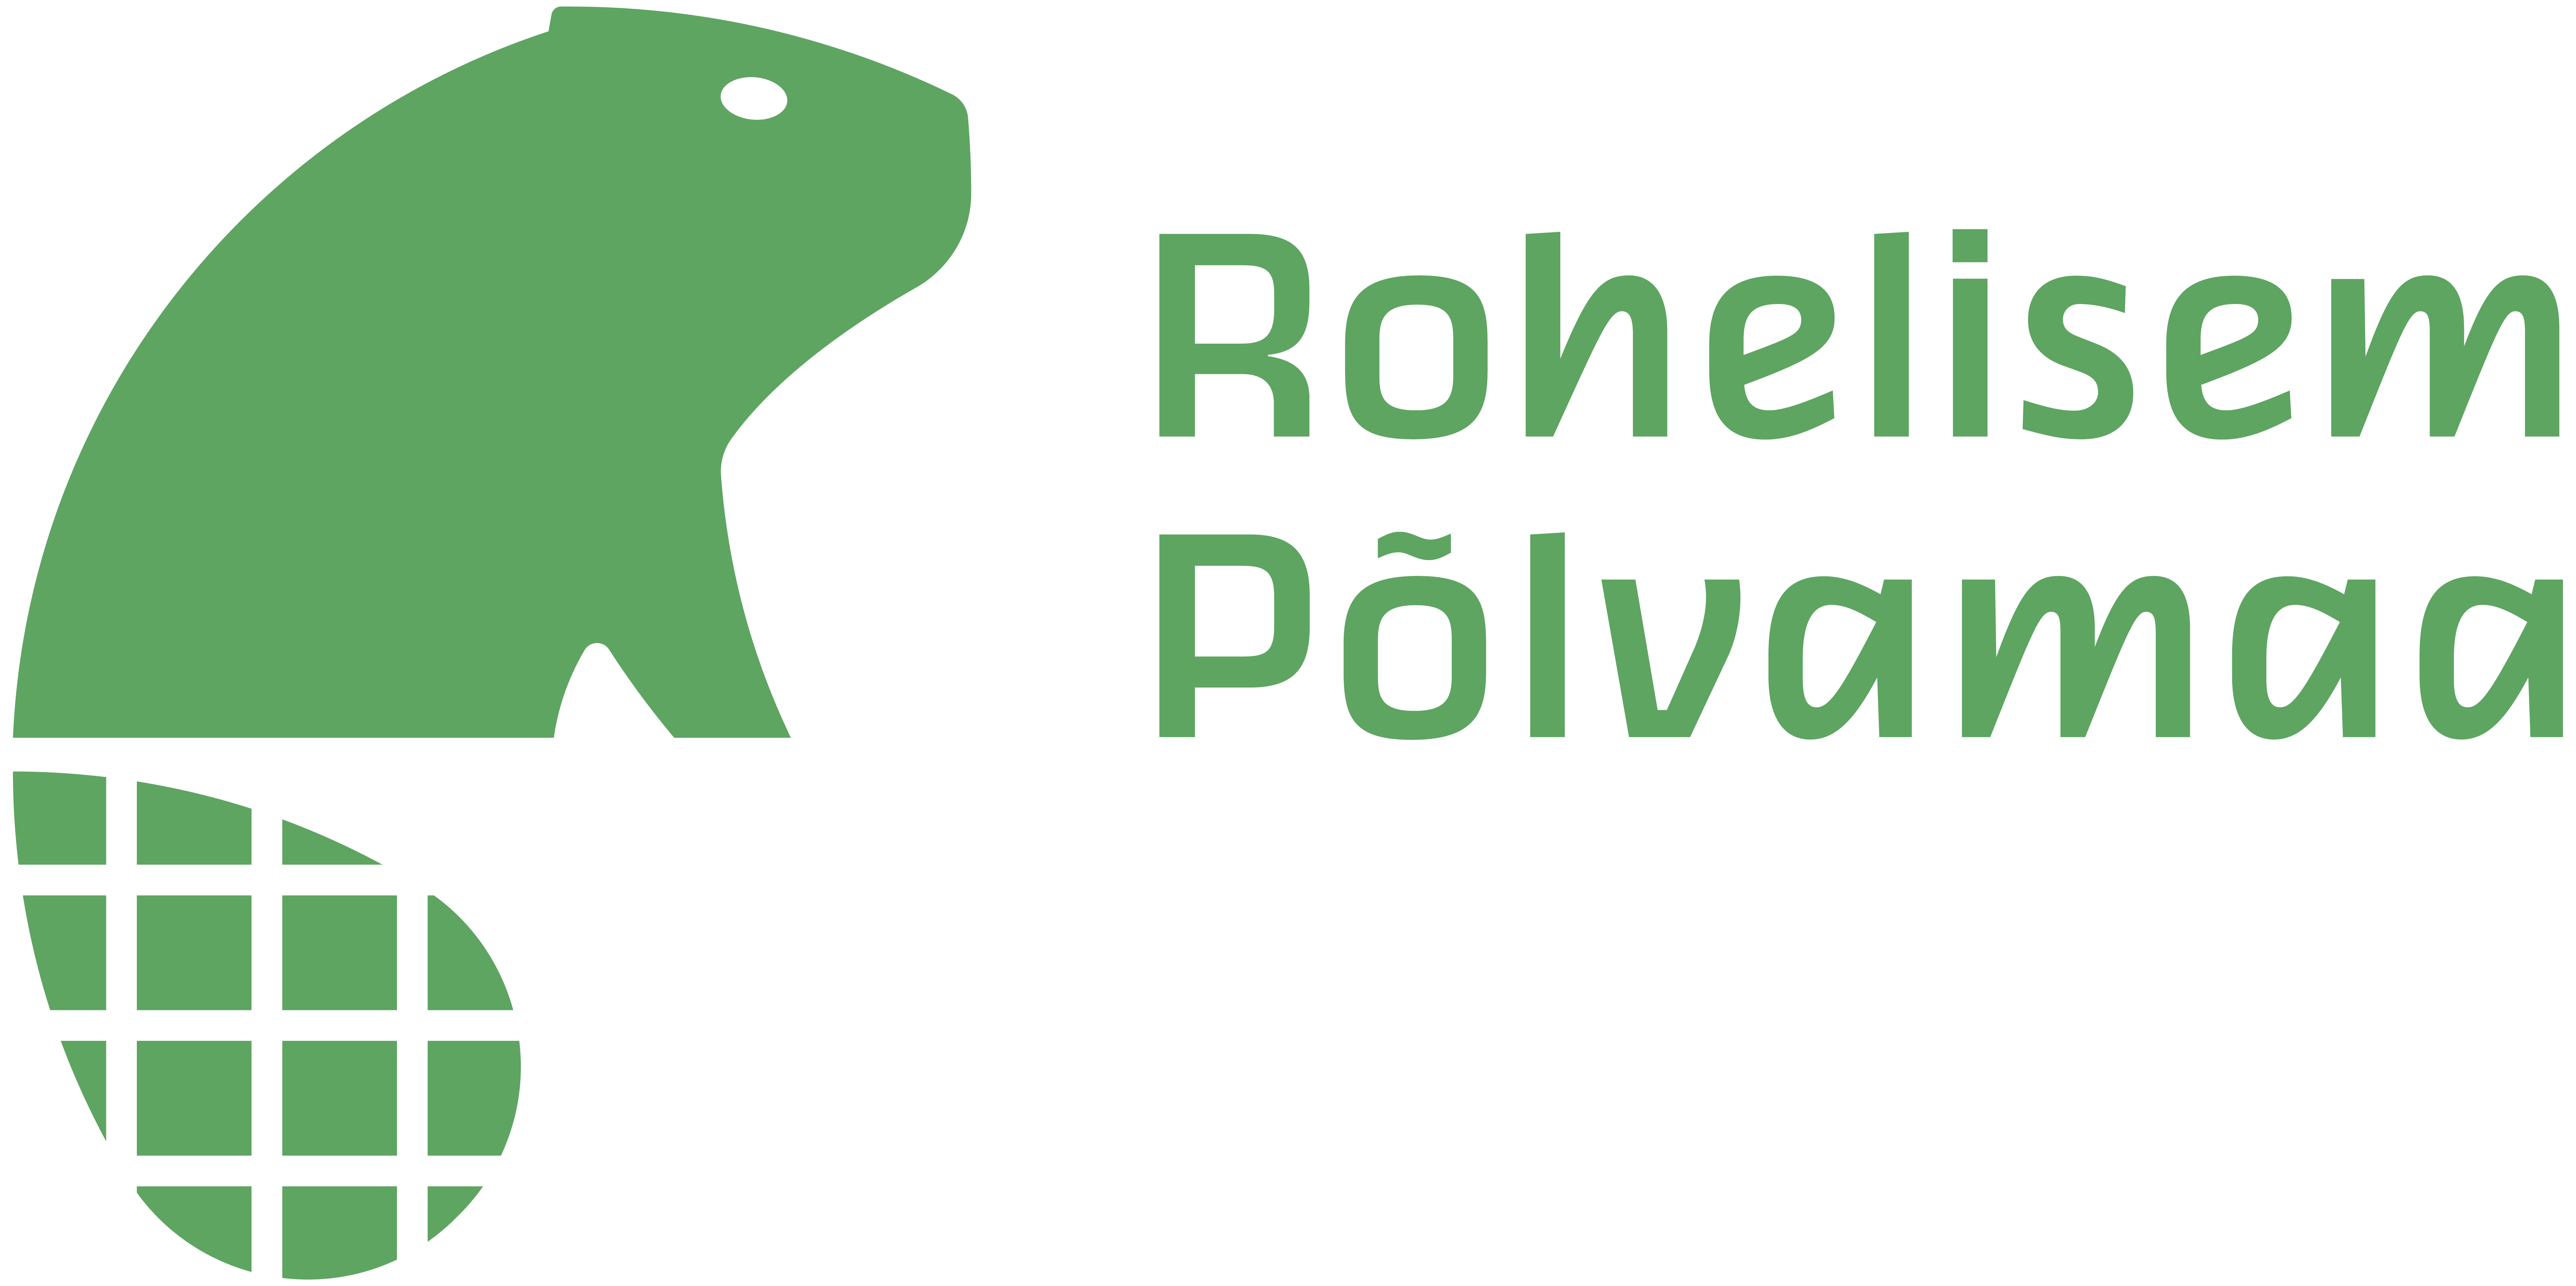 RohelisemPolvamaa - horistonaalne_logo_roheline.png (271 KB)